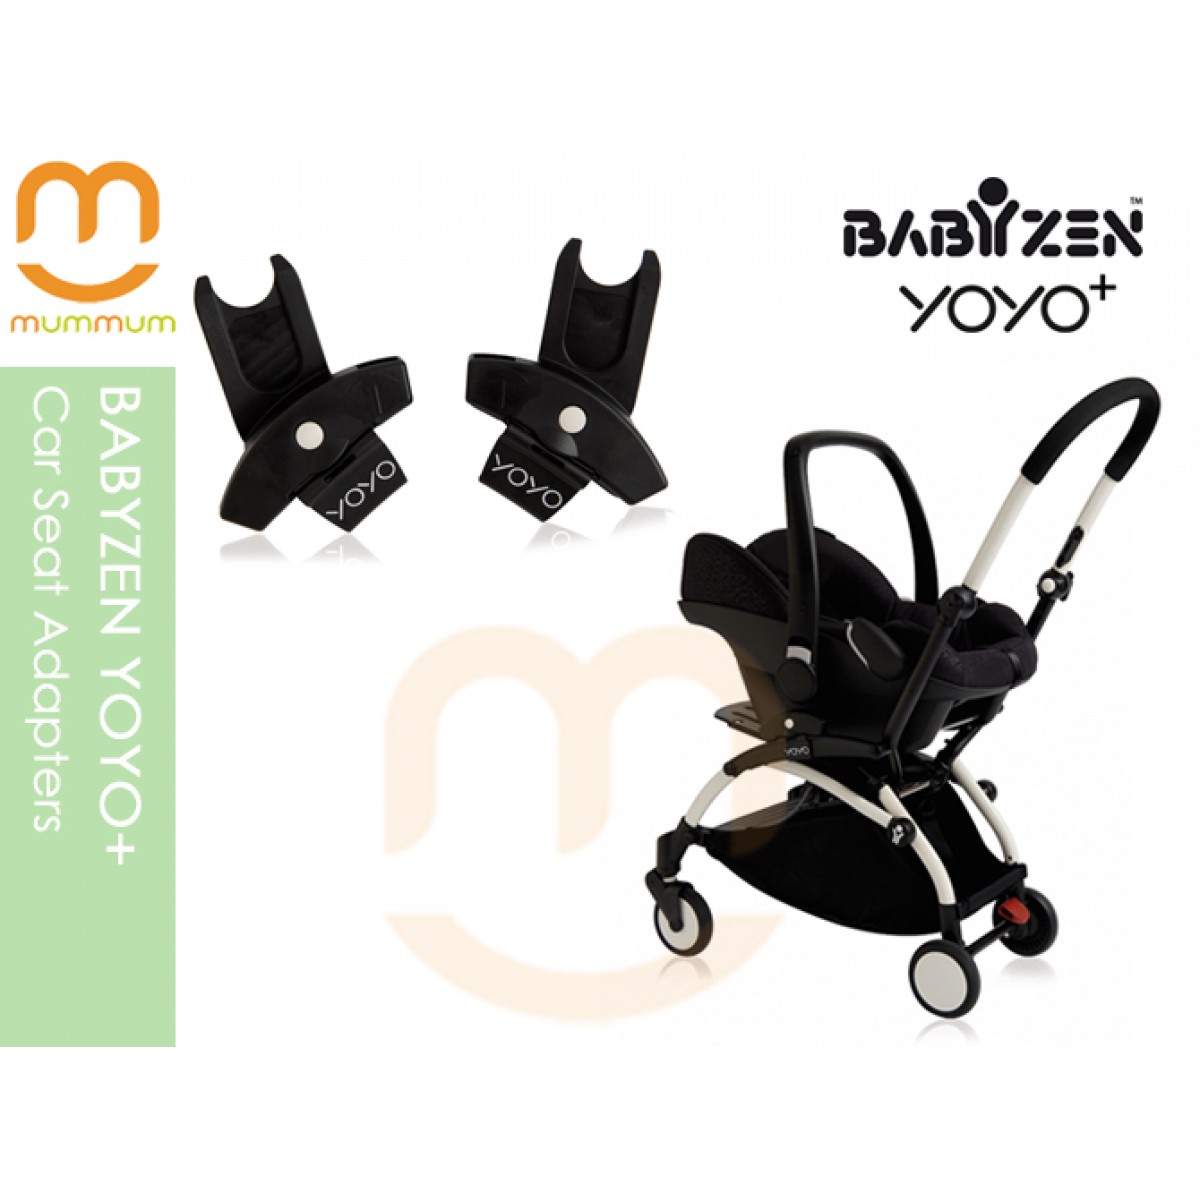 yoyo babyzen car seat adapter